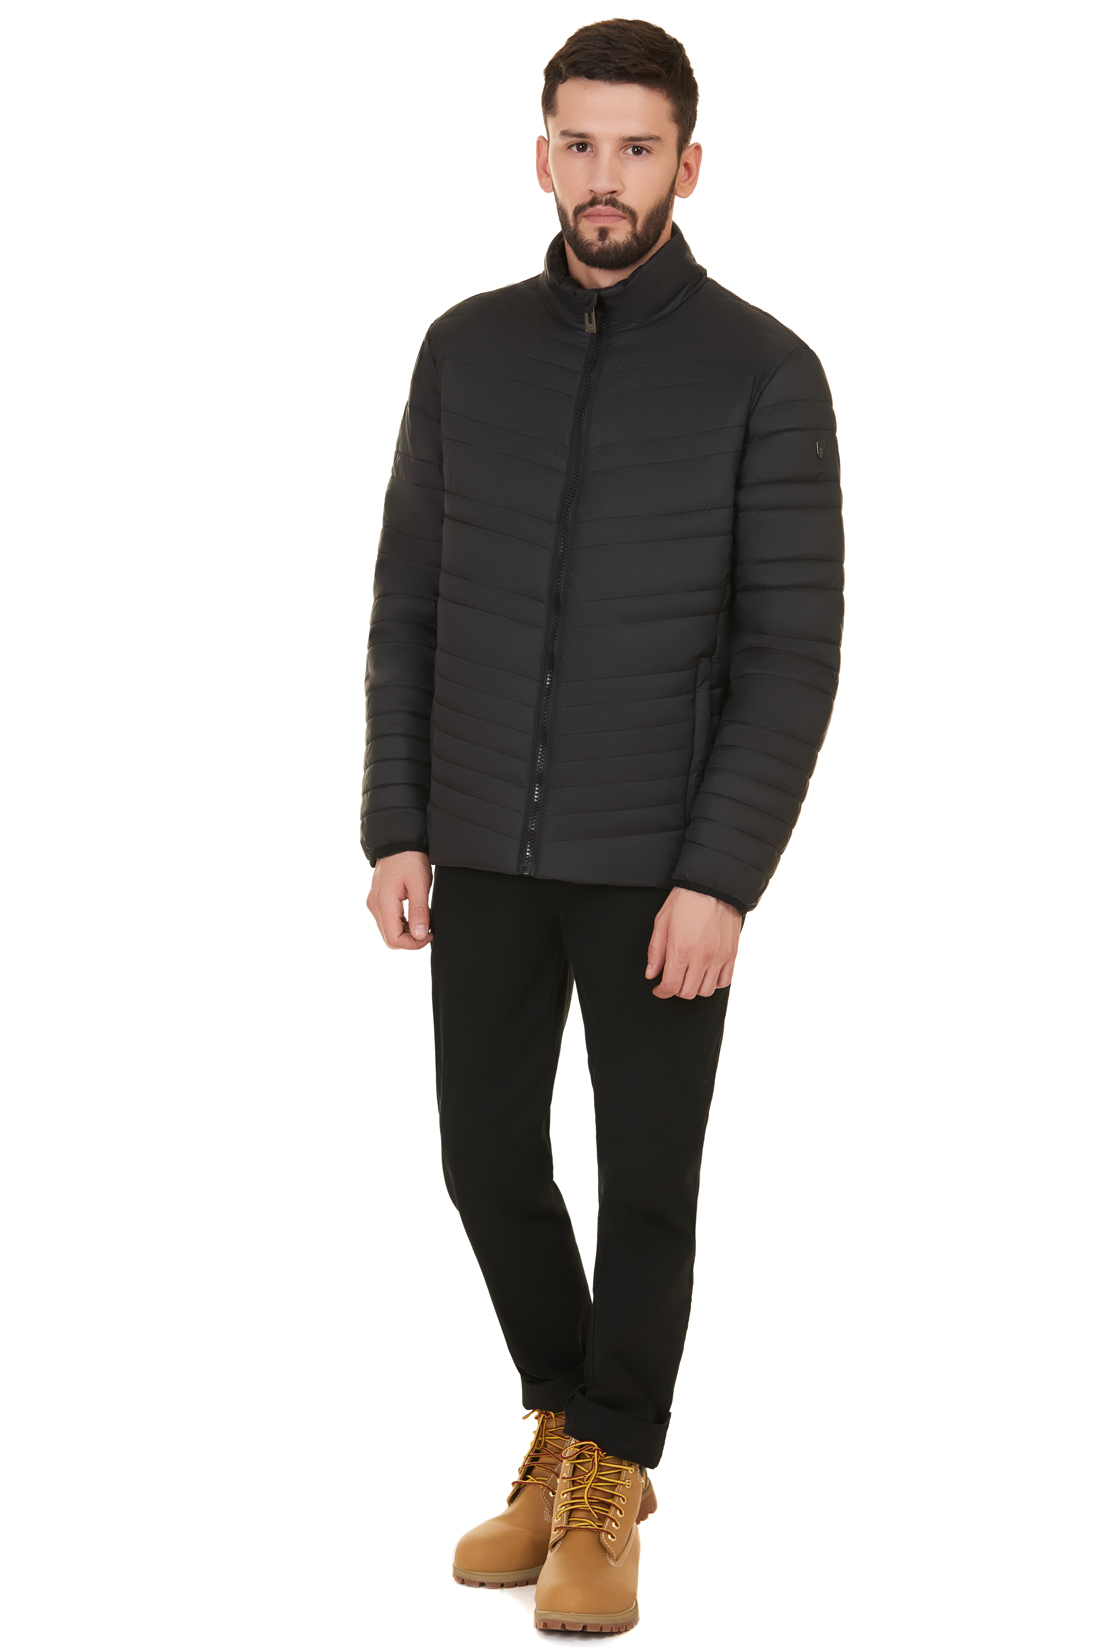 Куртка с наклонной простёжкой (арт. baon B537522), размер XXL, цвет черный Куртка с наклонной простёжкой (арт. baon B537522) - фото 5